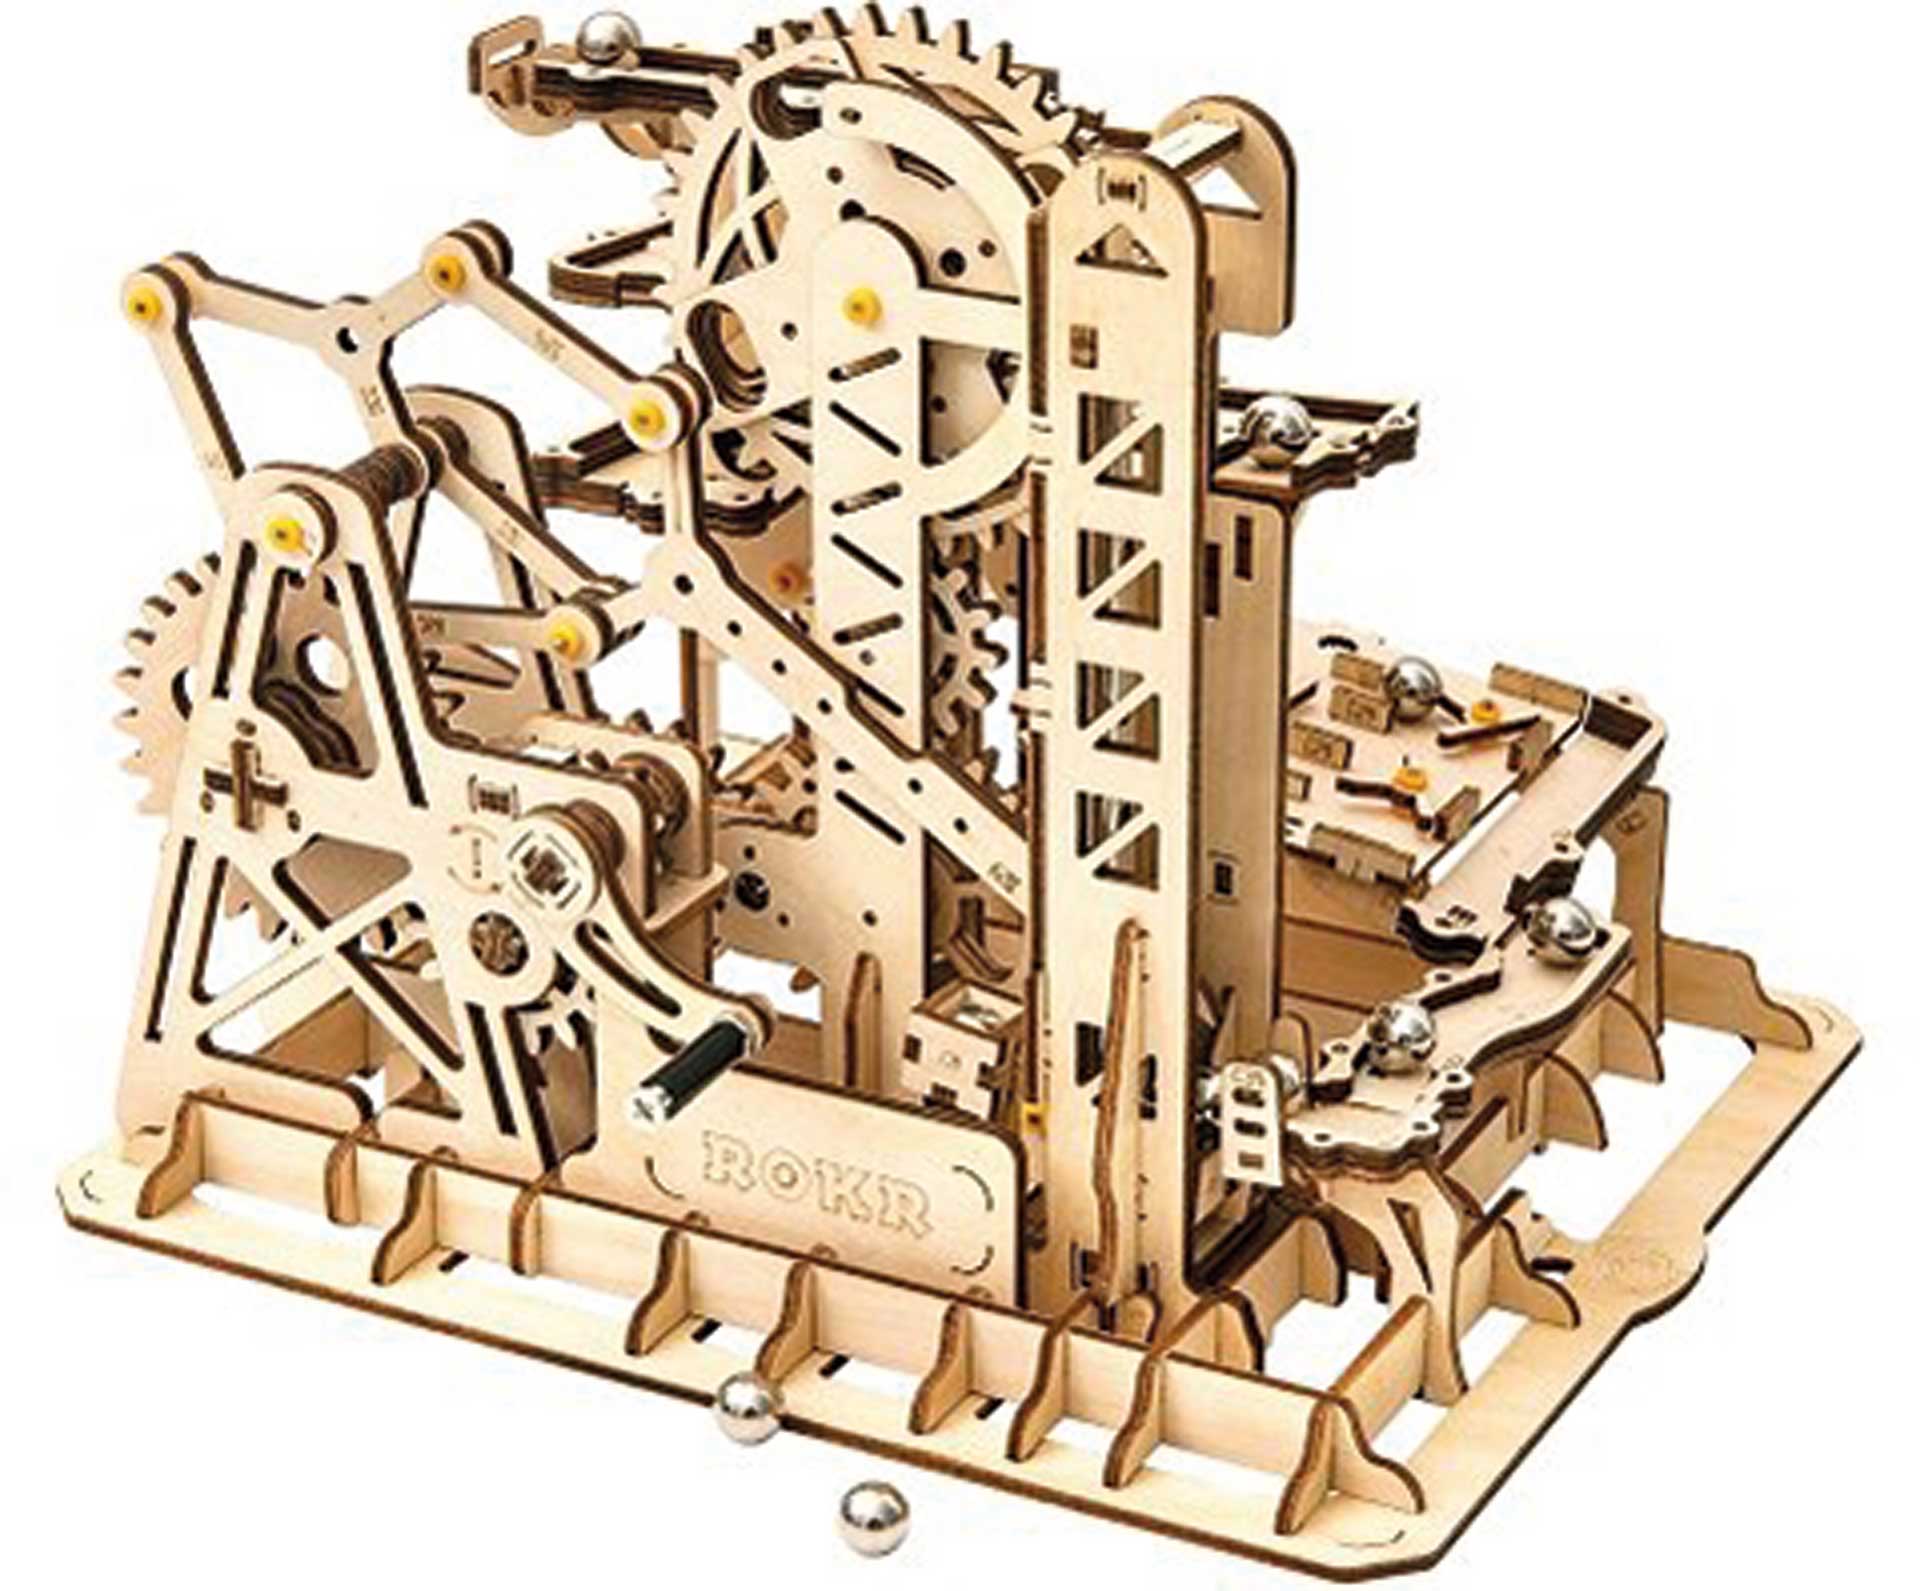 Pichler Marble run Tower Coaster (lasercut) Wooden kit)